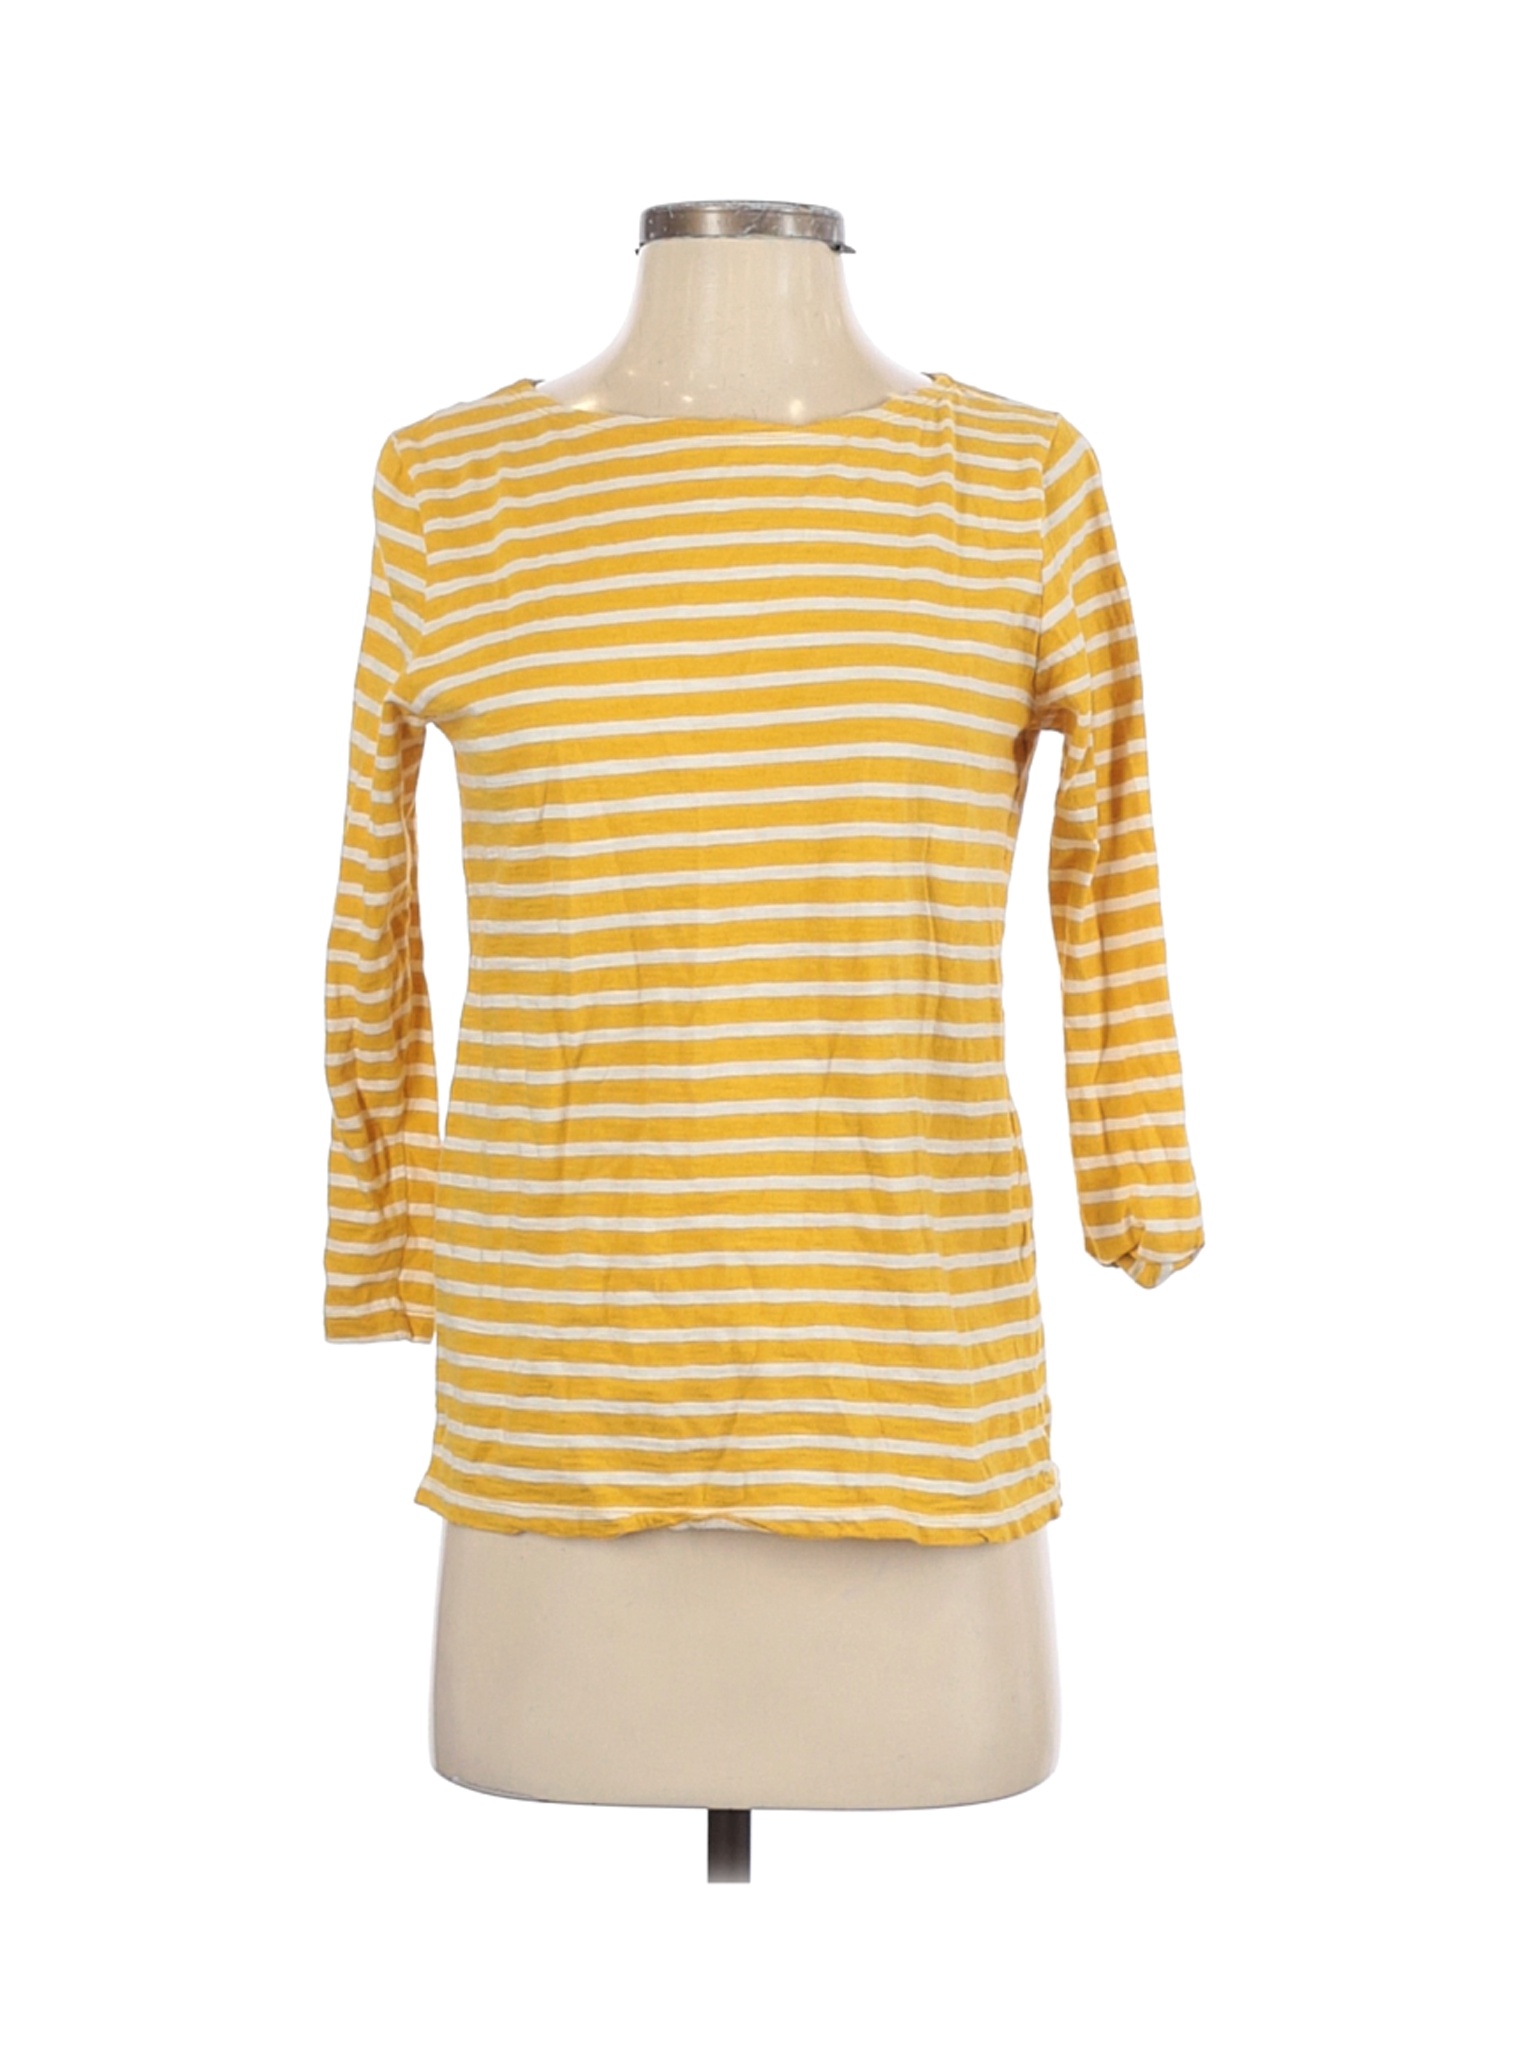 Old Navy Women Yellow Long Sleeve T-Shirt S | eBay